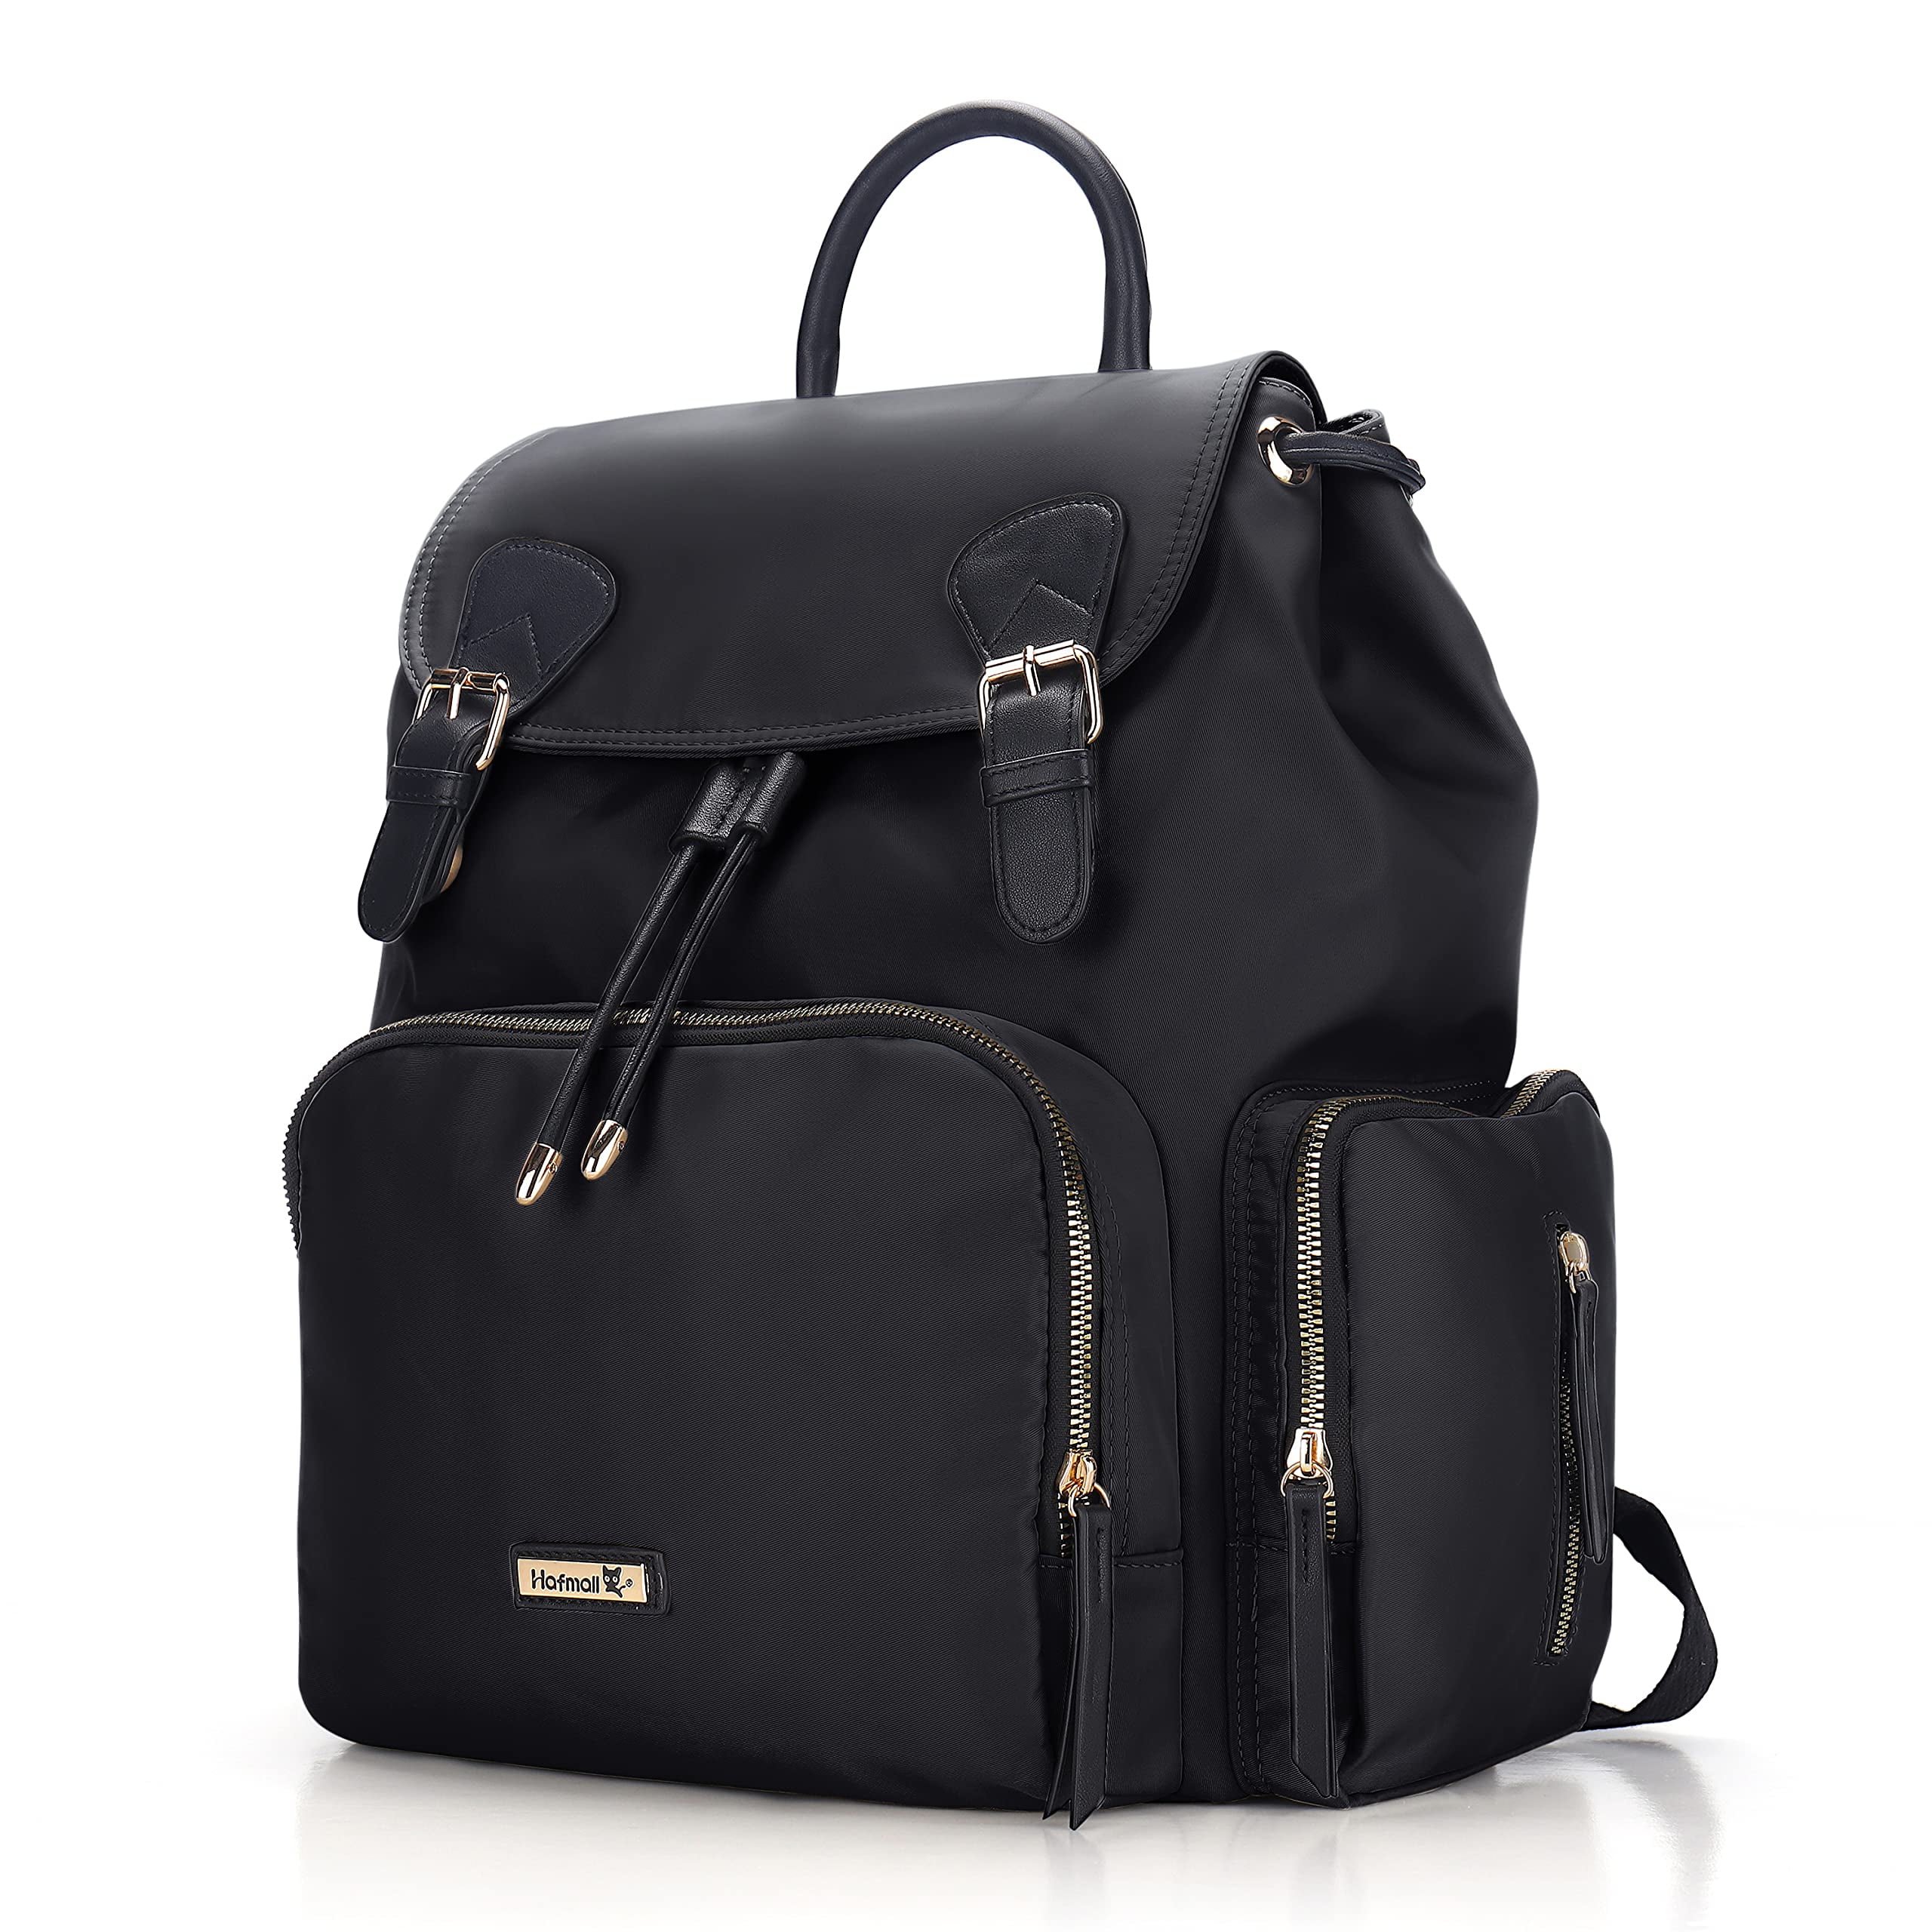 Hafmall 24L Diaper Bag Backpack, Multifunction Stylish Travel Baby Bag ...